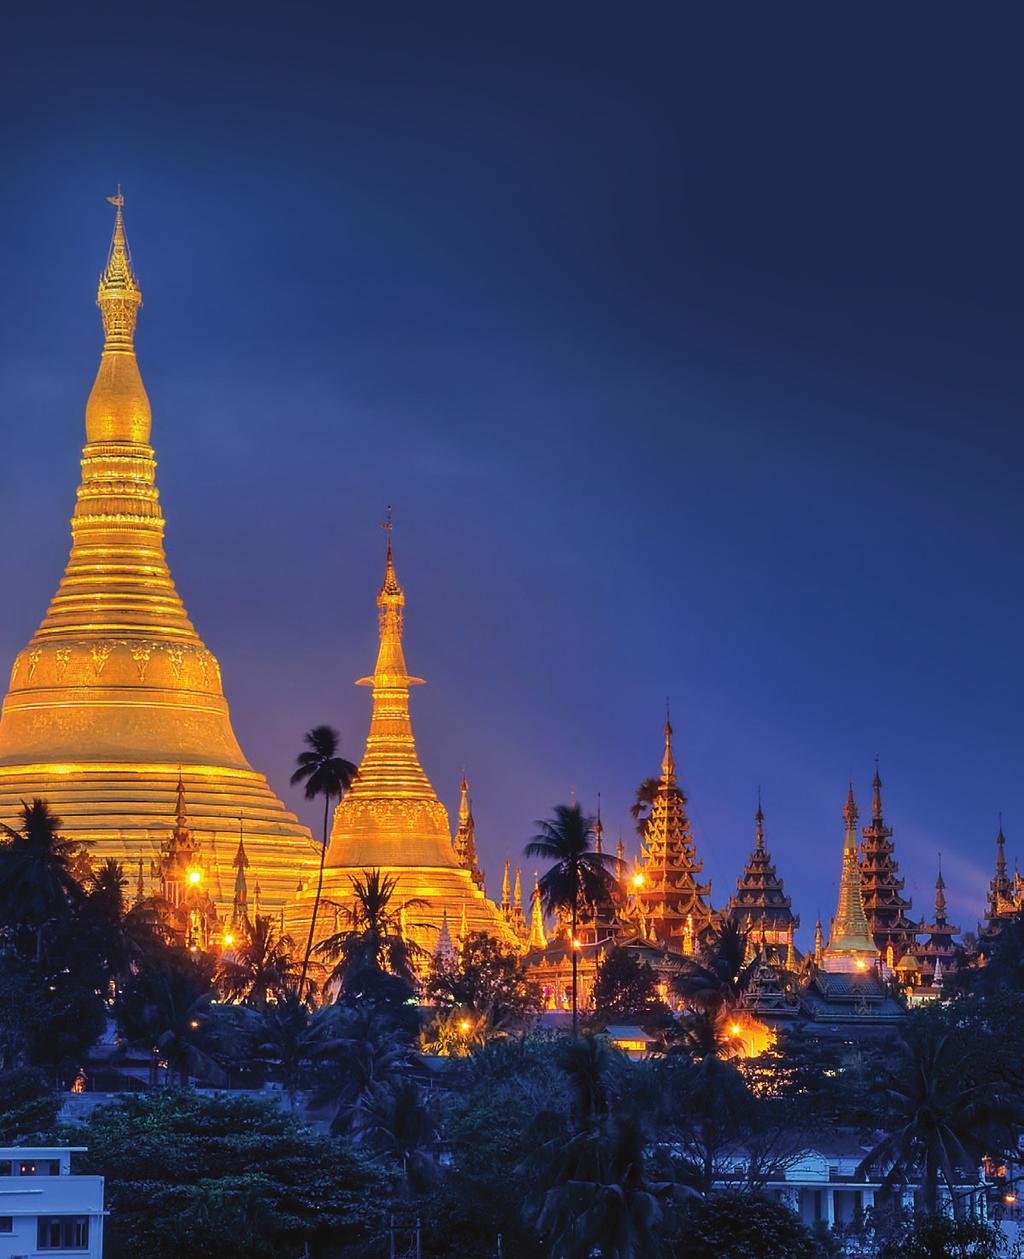 Golden Myanmar Yangon and a Cruise to Mandalay November 10 24, 2014 15 days, 11 nights Post-Tour Extension to Inle Lake: November 23